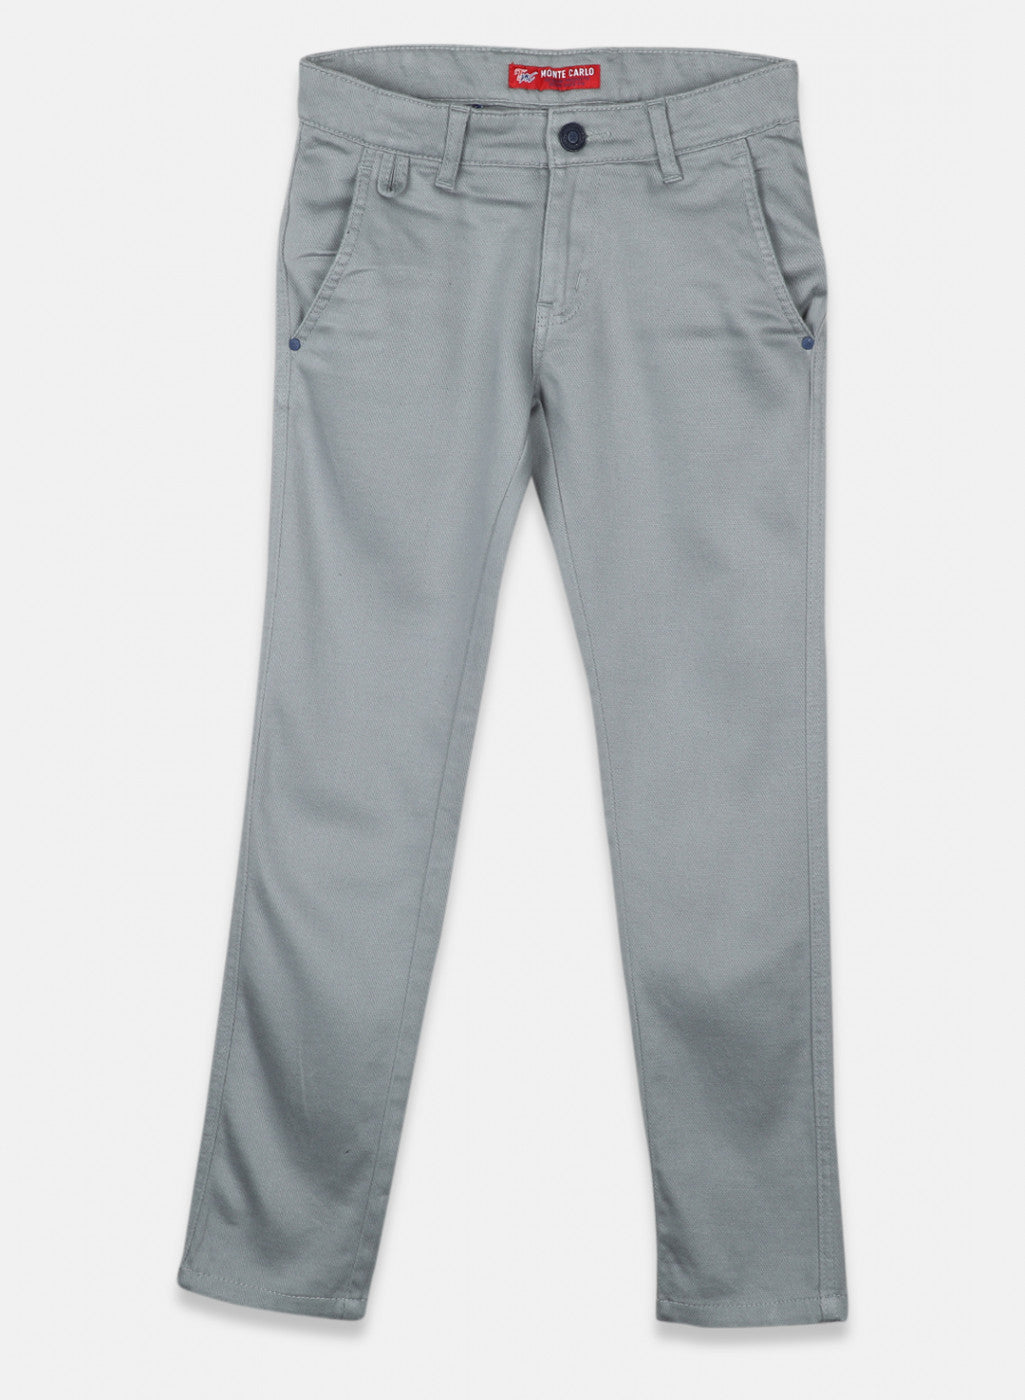 Kid Boys Casual Camo Cargo Pants Elastic Waist Sports Jogger Trousers  Sweatpants | eBay